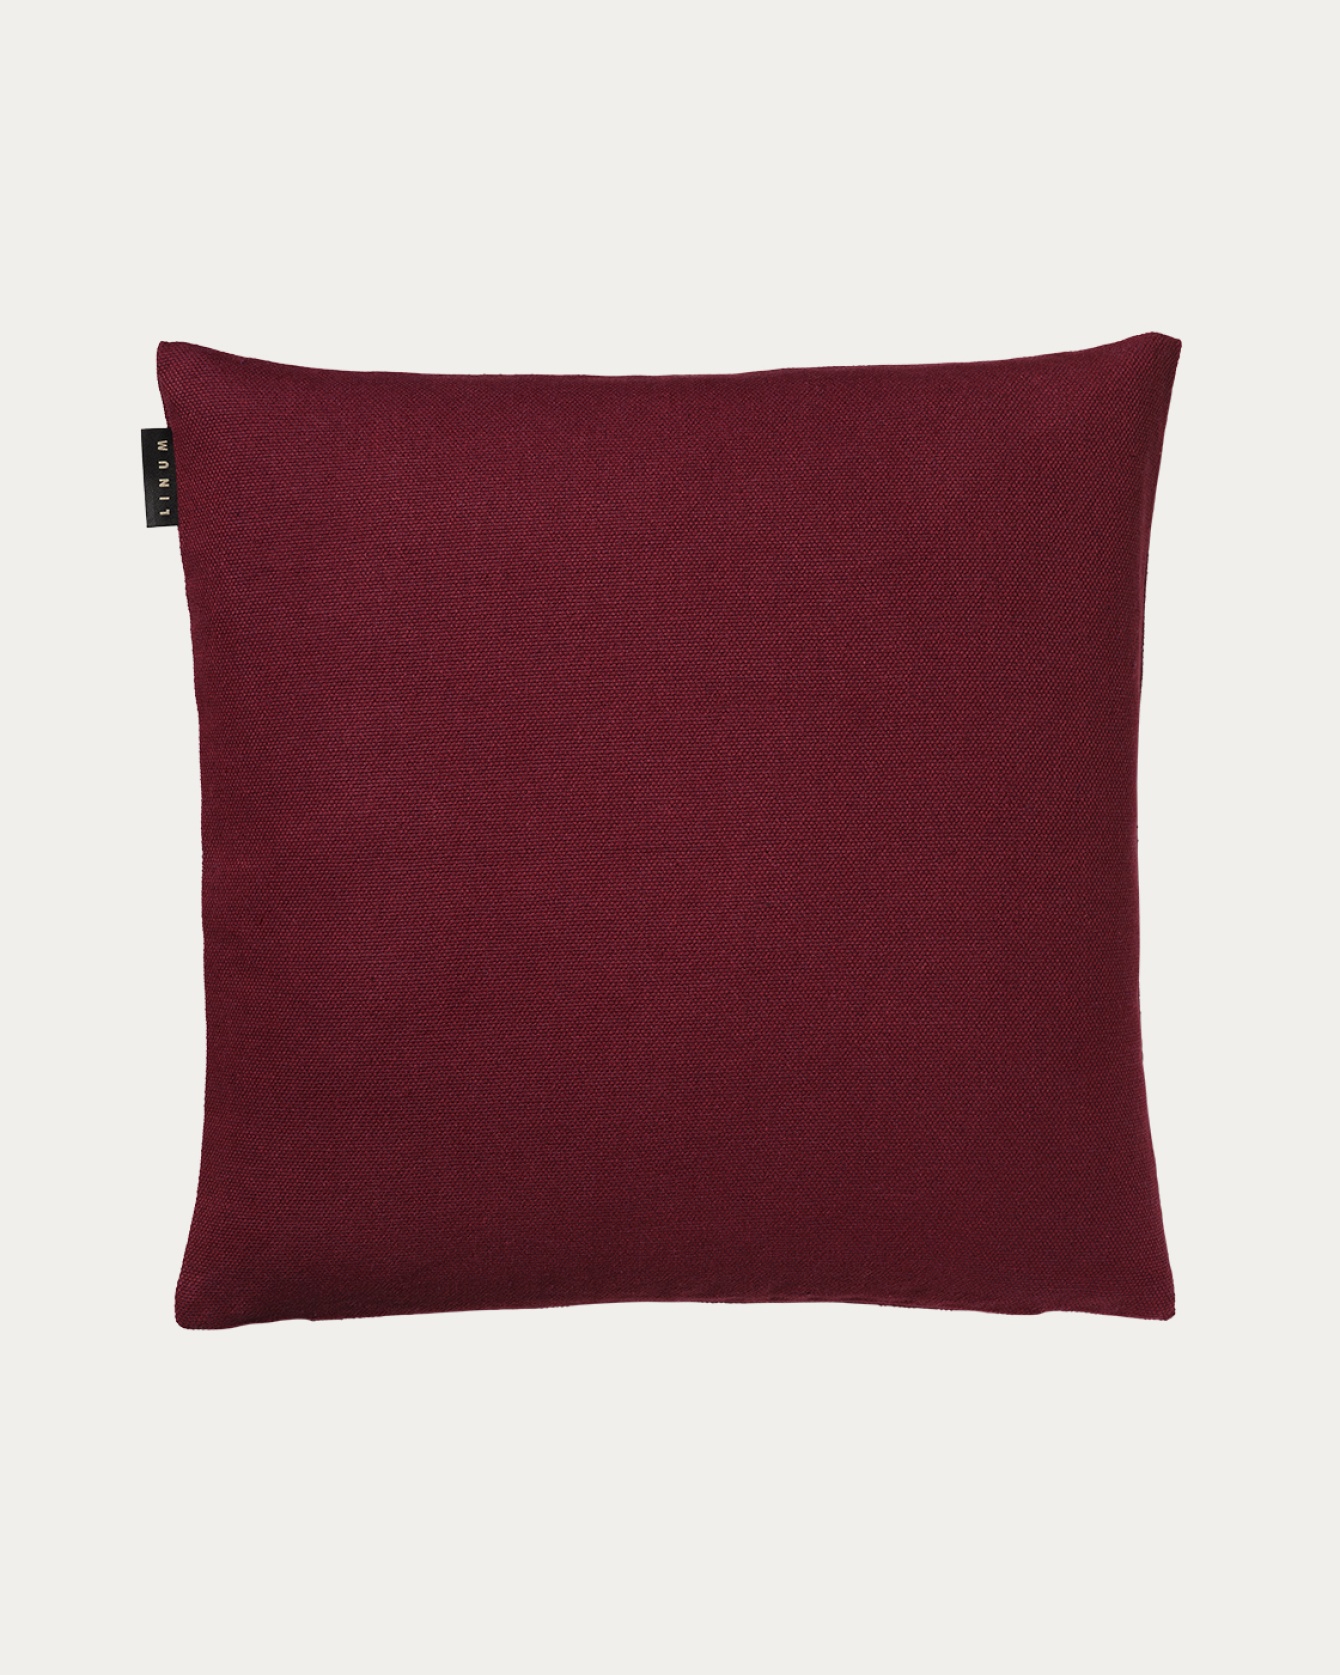 PEPPER Cushion cover 50x50 cm Burgundy red